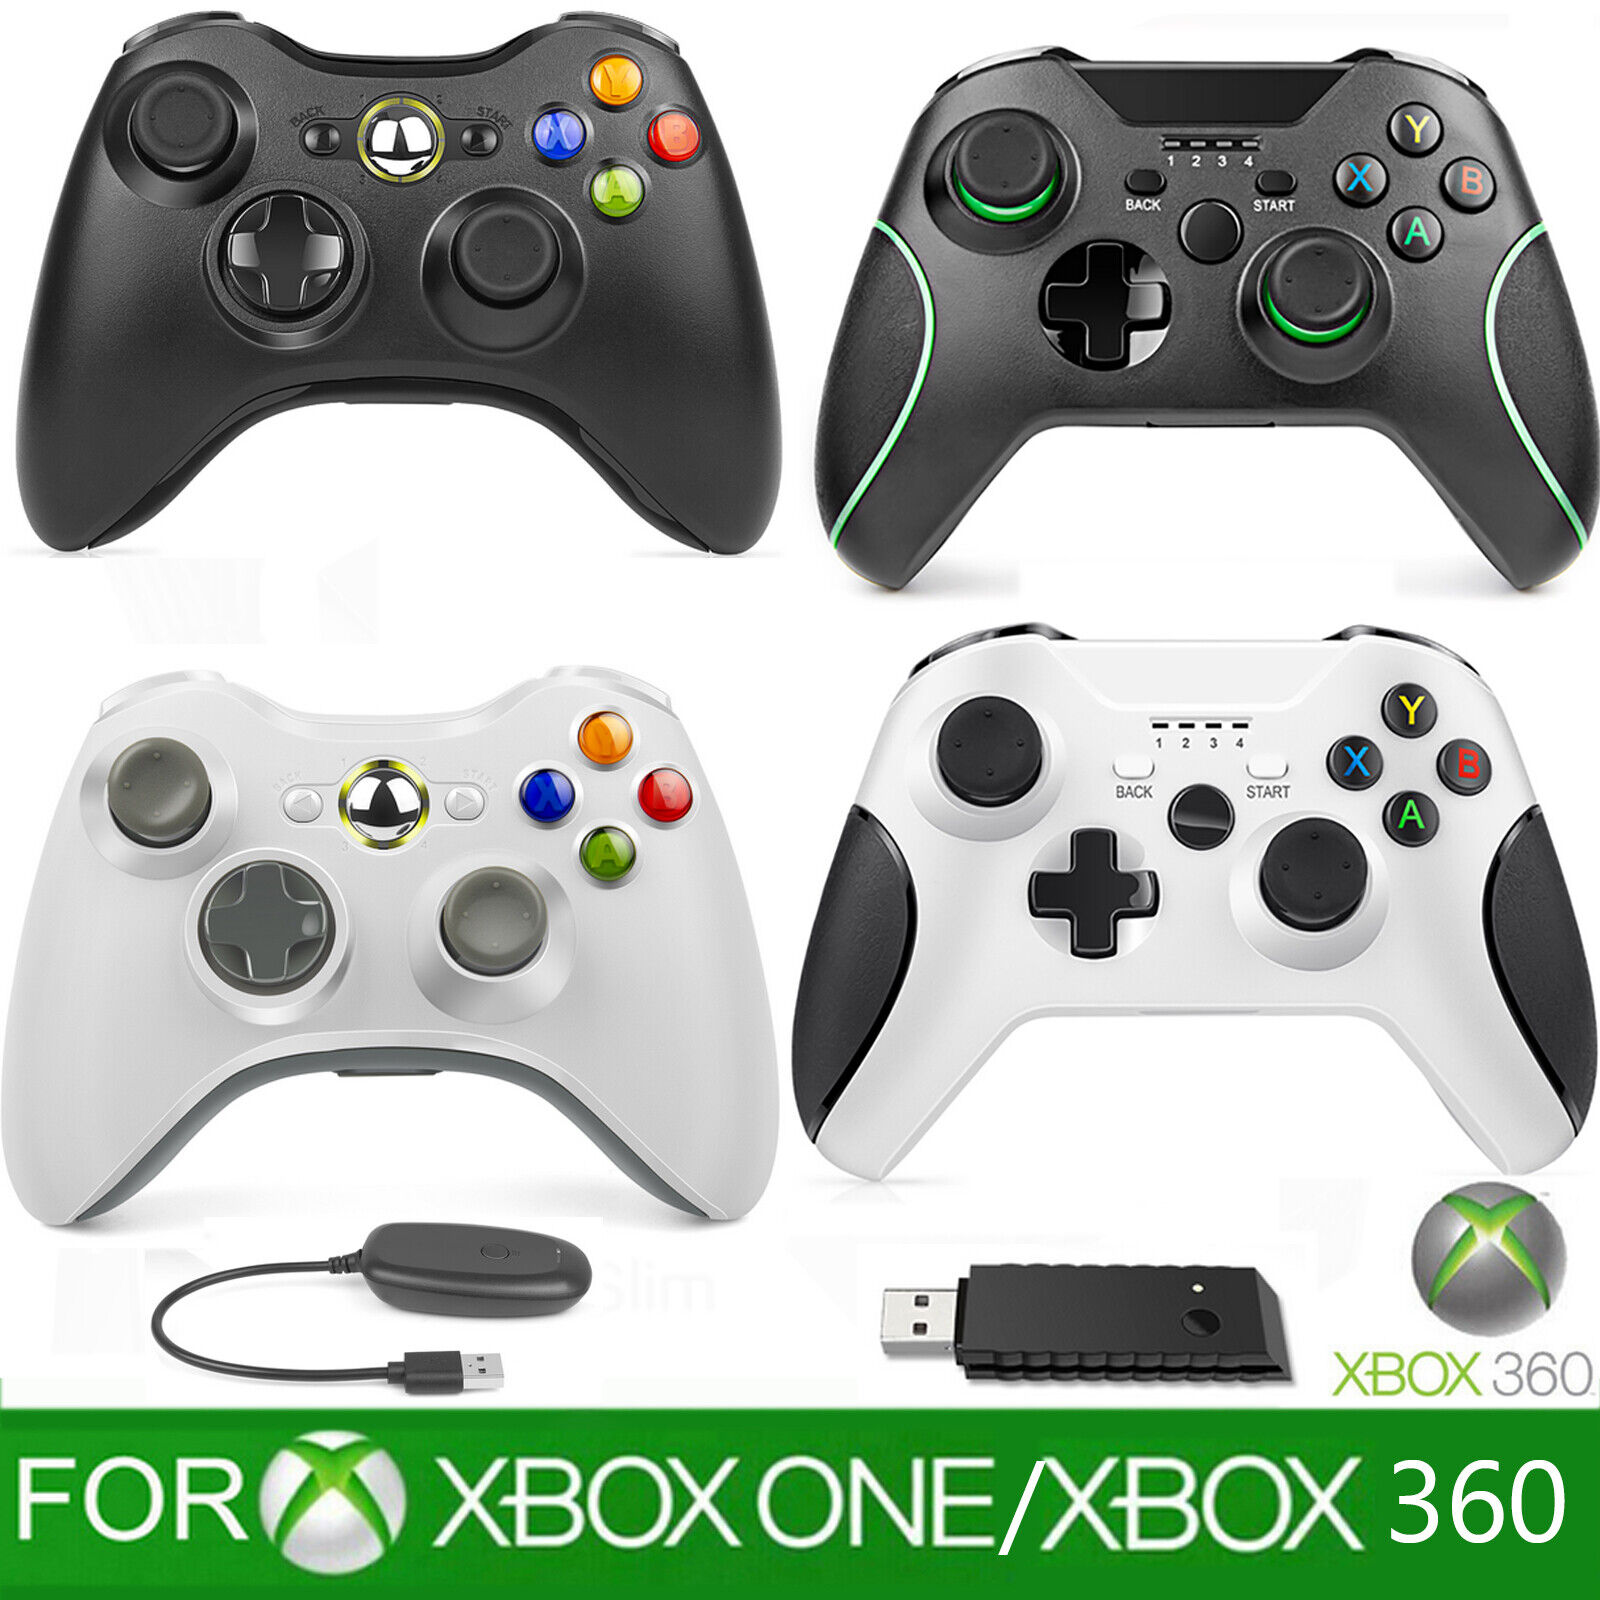 Геймпад windows 7. Connect x Xbox 360. Новый геймпад Xbox 2023. Геймпад ZM-x6. Microsoft беспроводной адаптер геймпада Xbox для Windows 10.